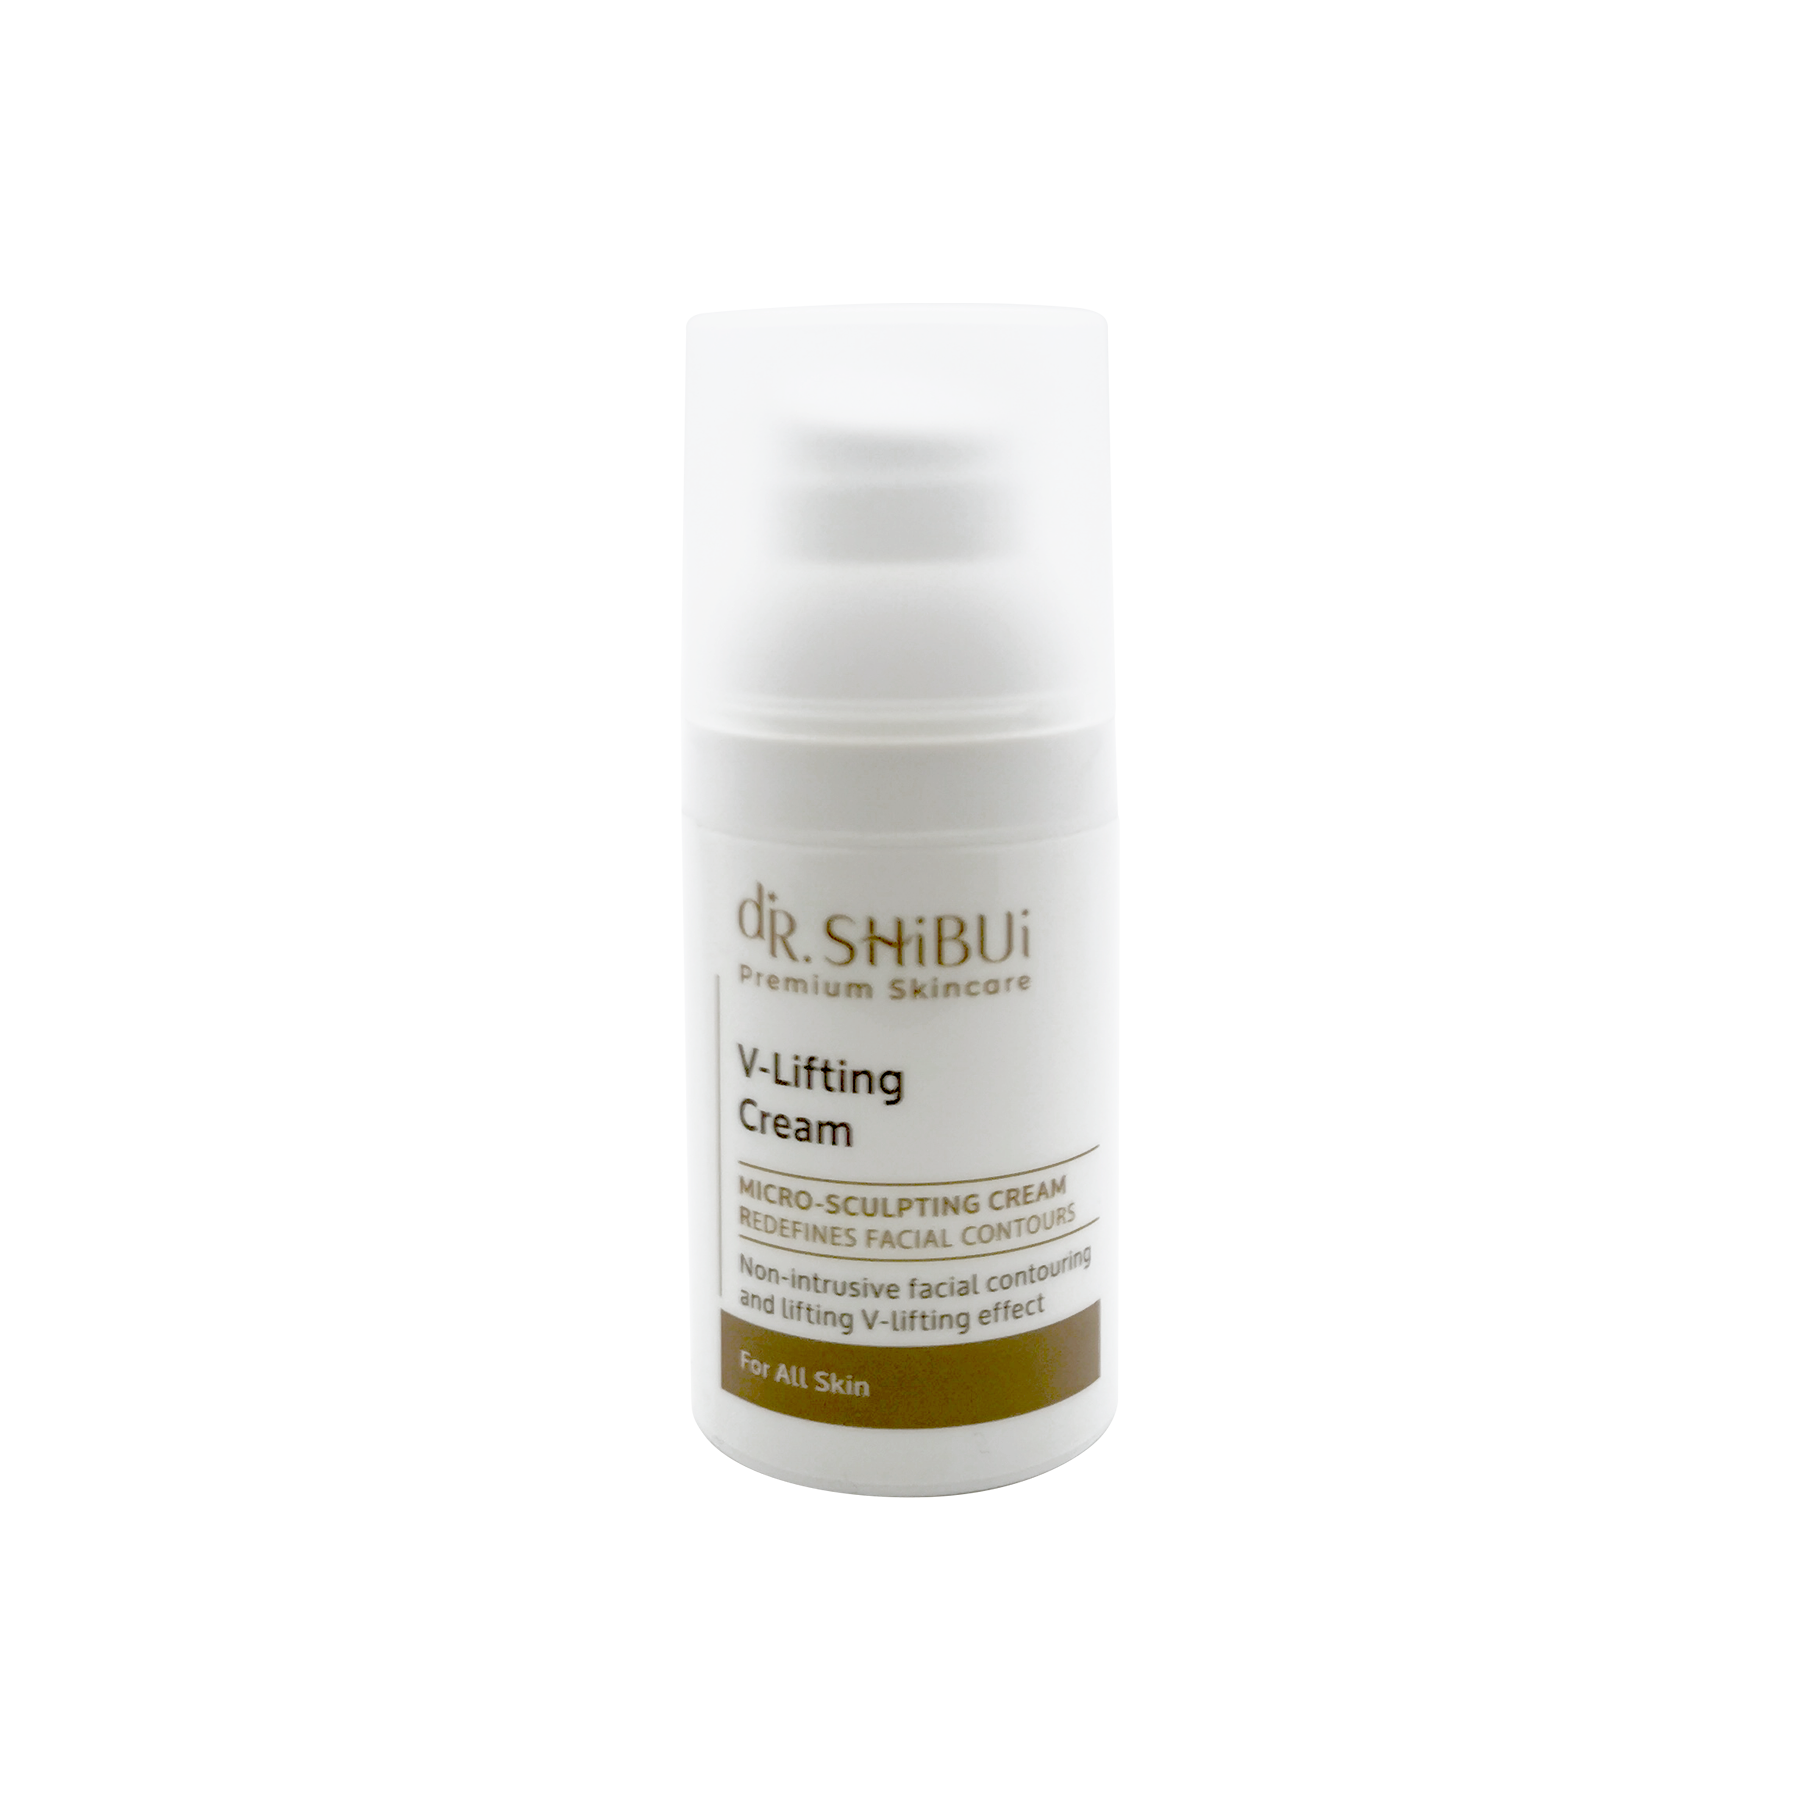 Dr. Shibui V-Lifting Cream 35g